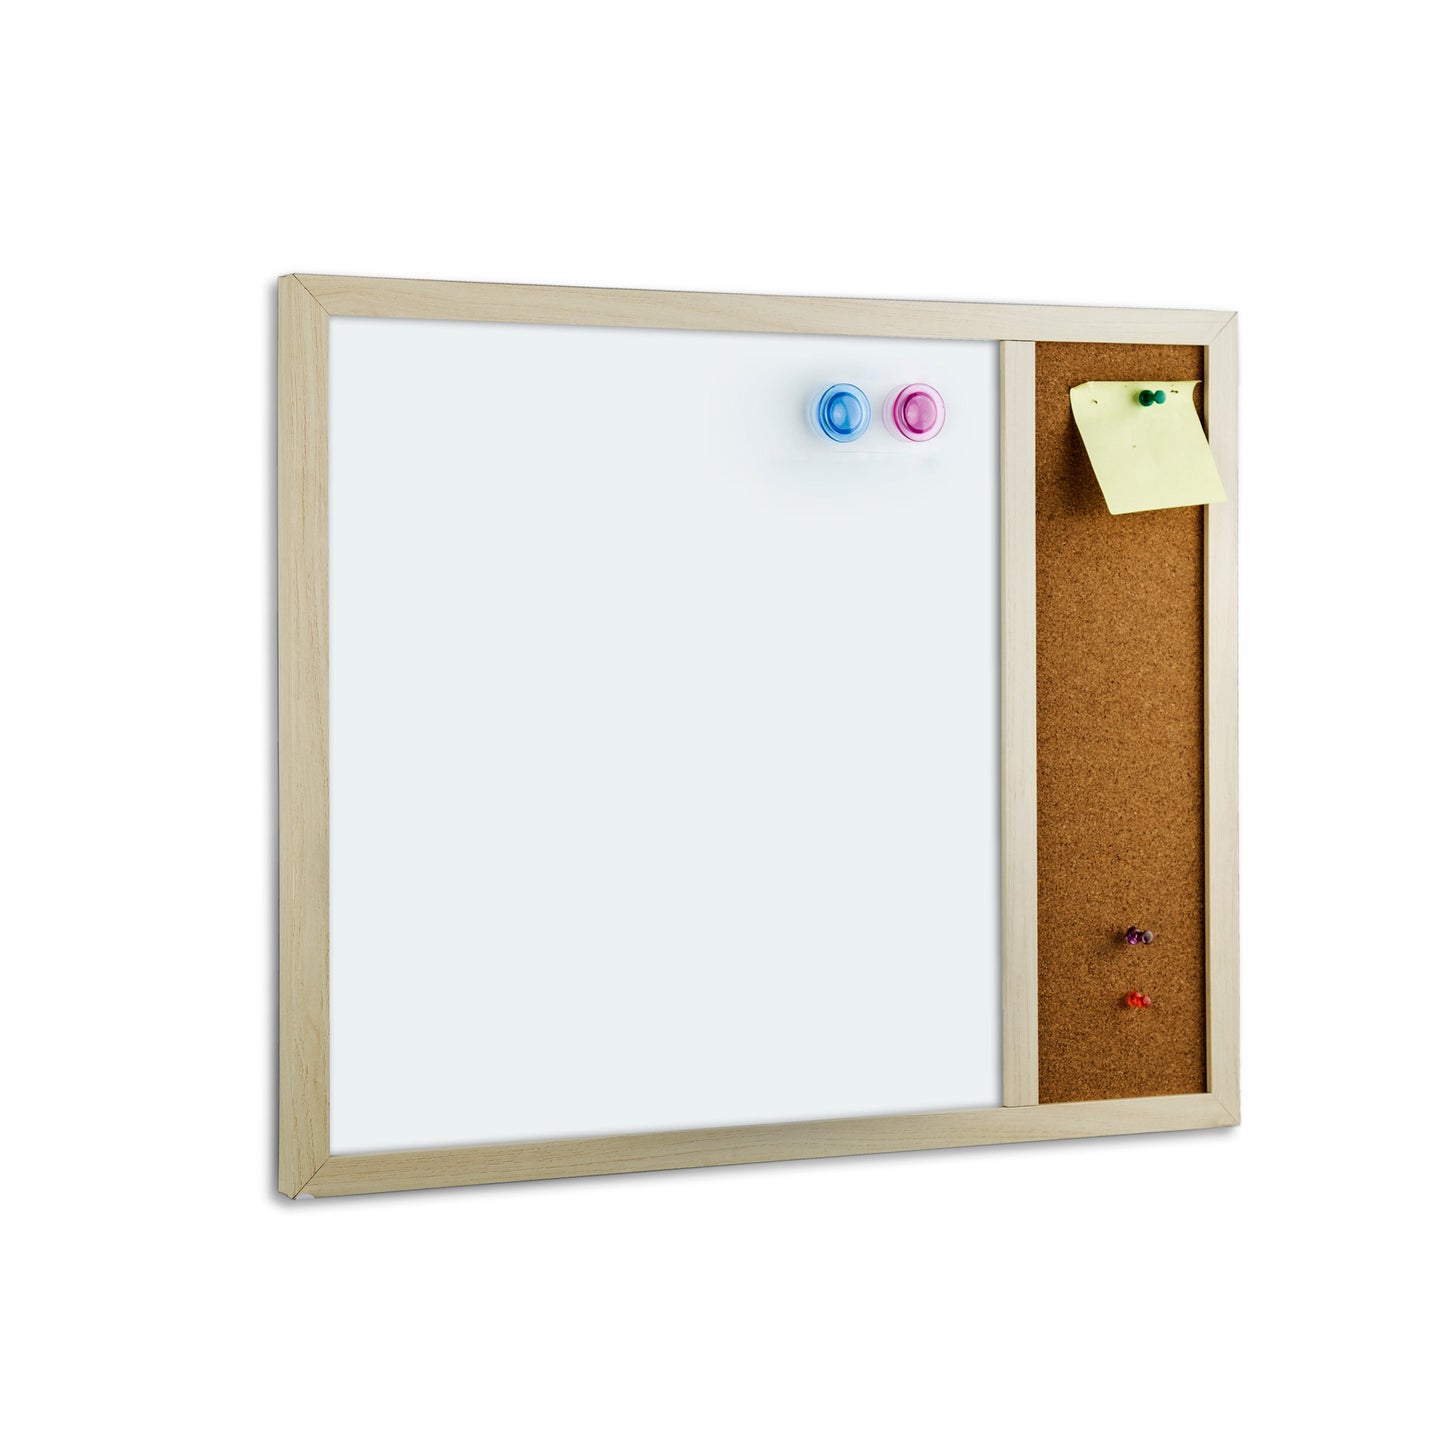 M47 MDF frame cork combo board, calendar planning board - Premium cork bulletin board from Madic Whiteboard - Madic Whiteboard